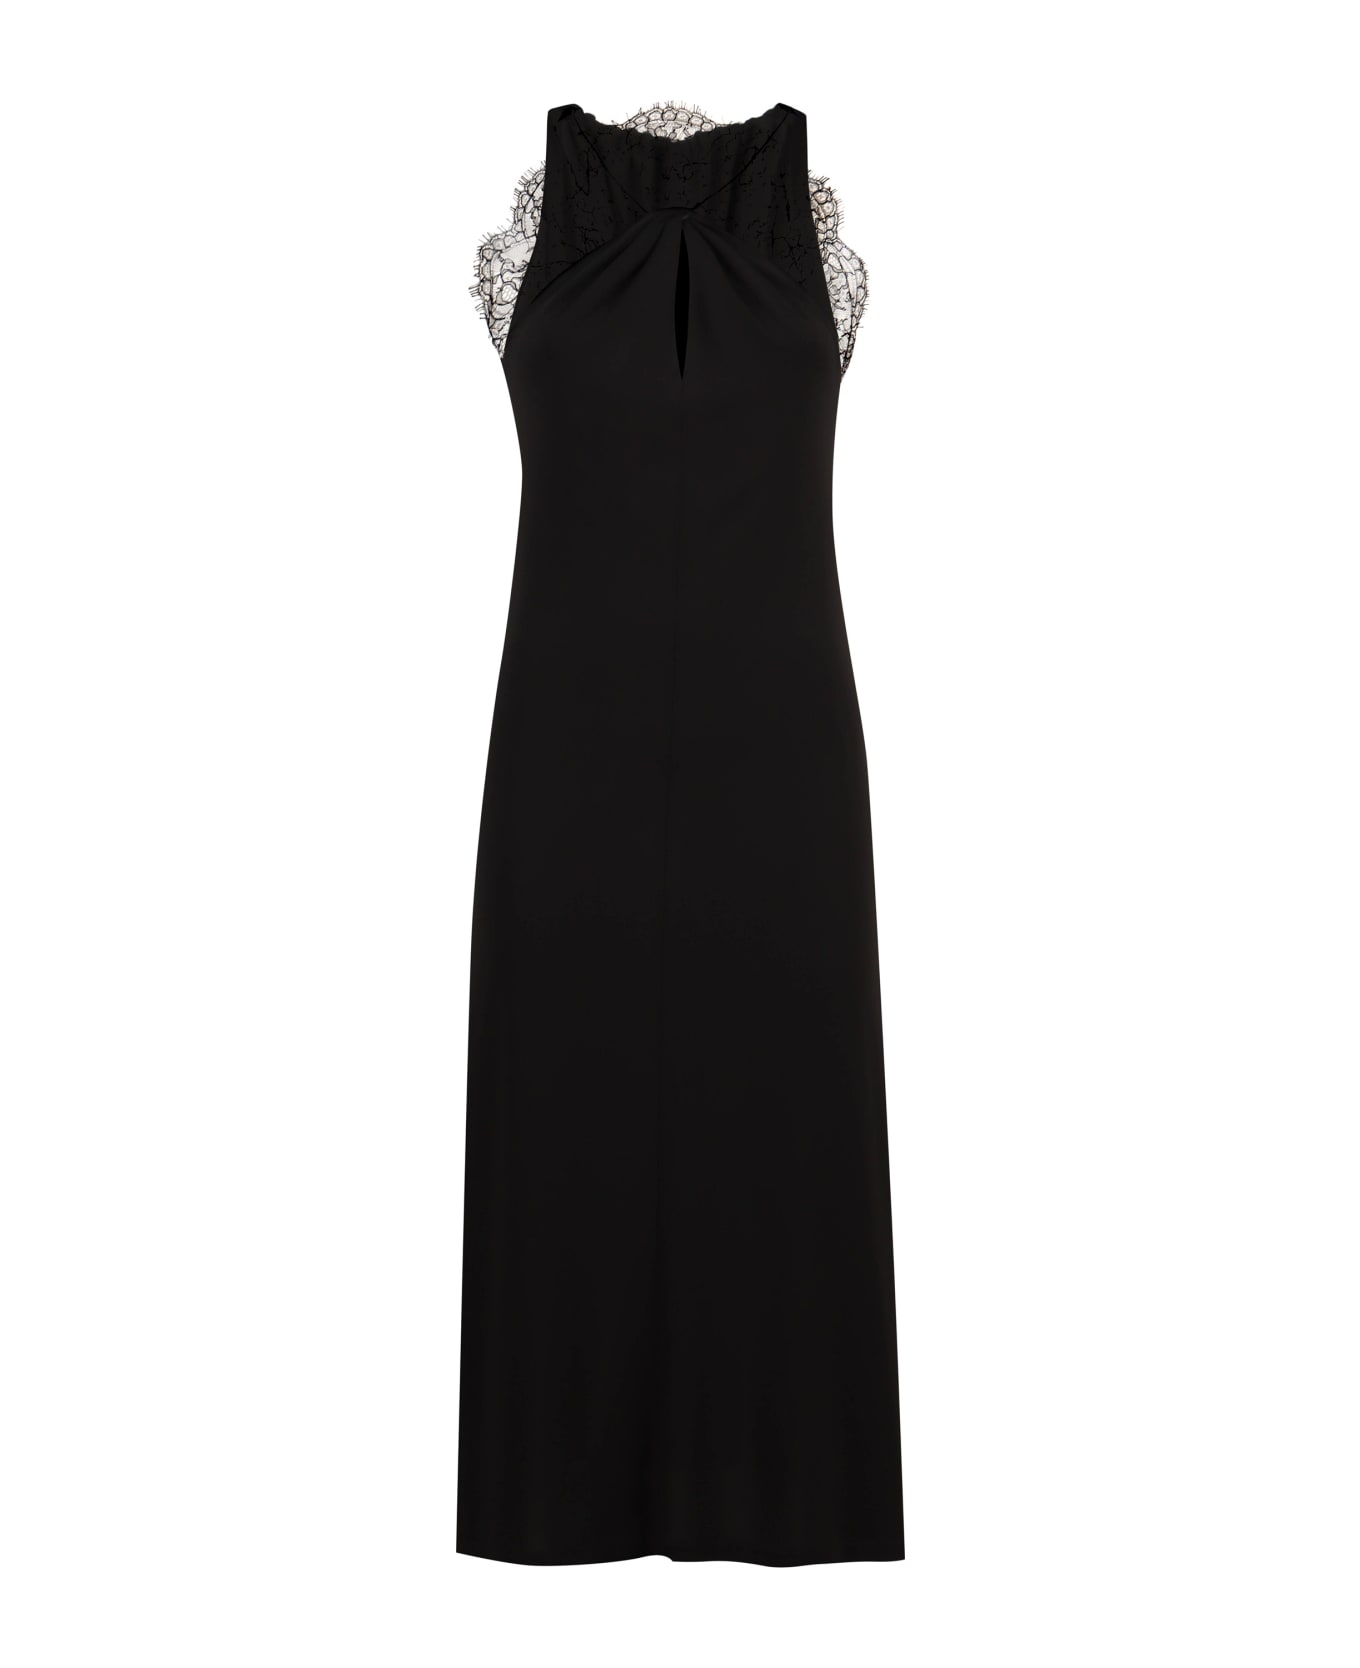 Givenchy Crepe Dress - black